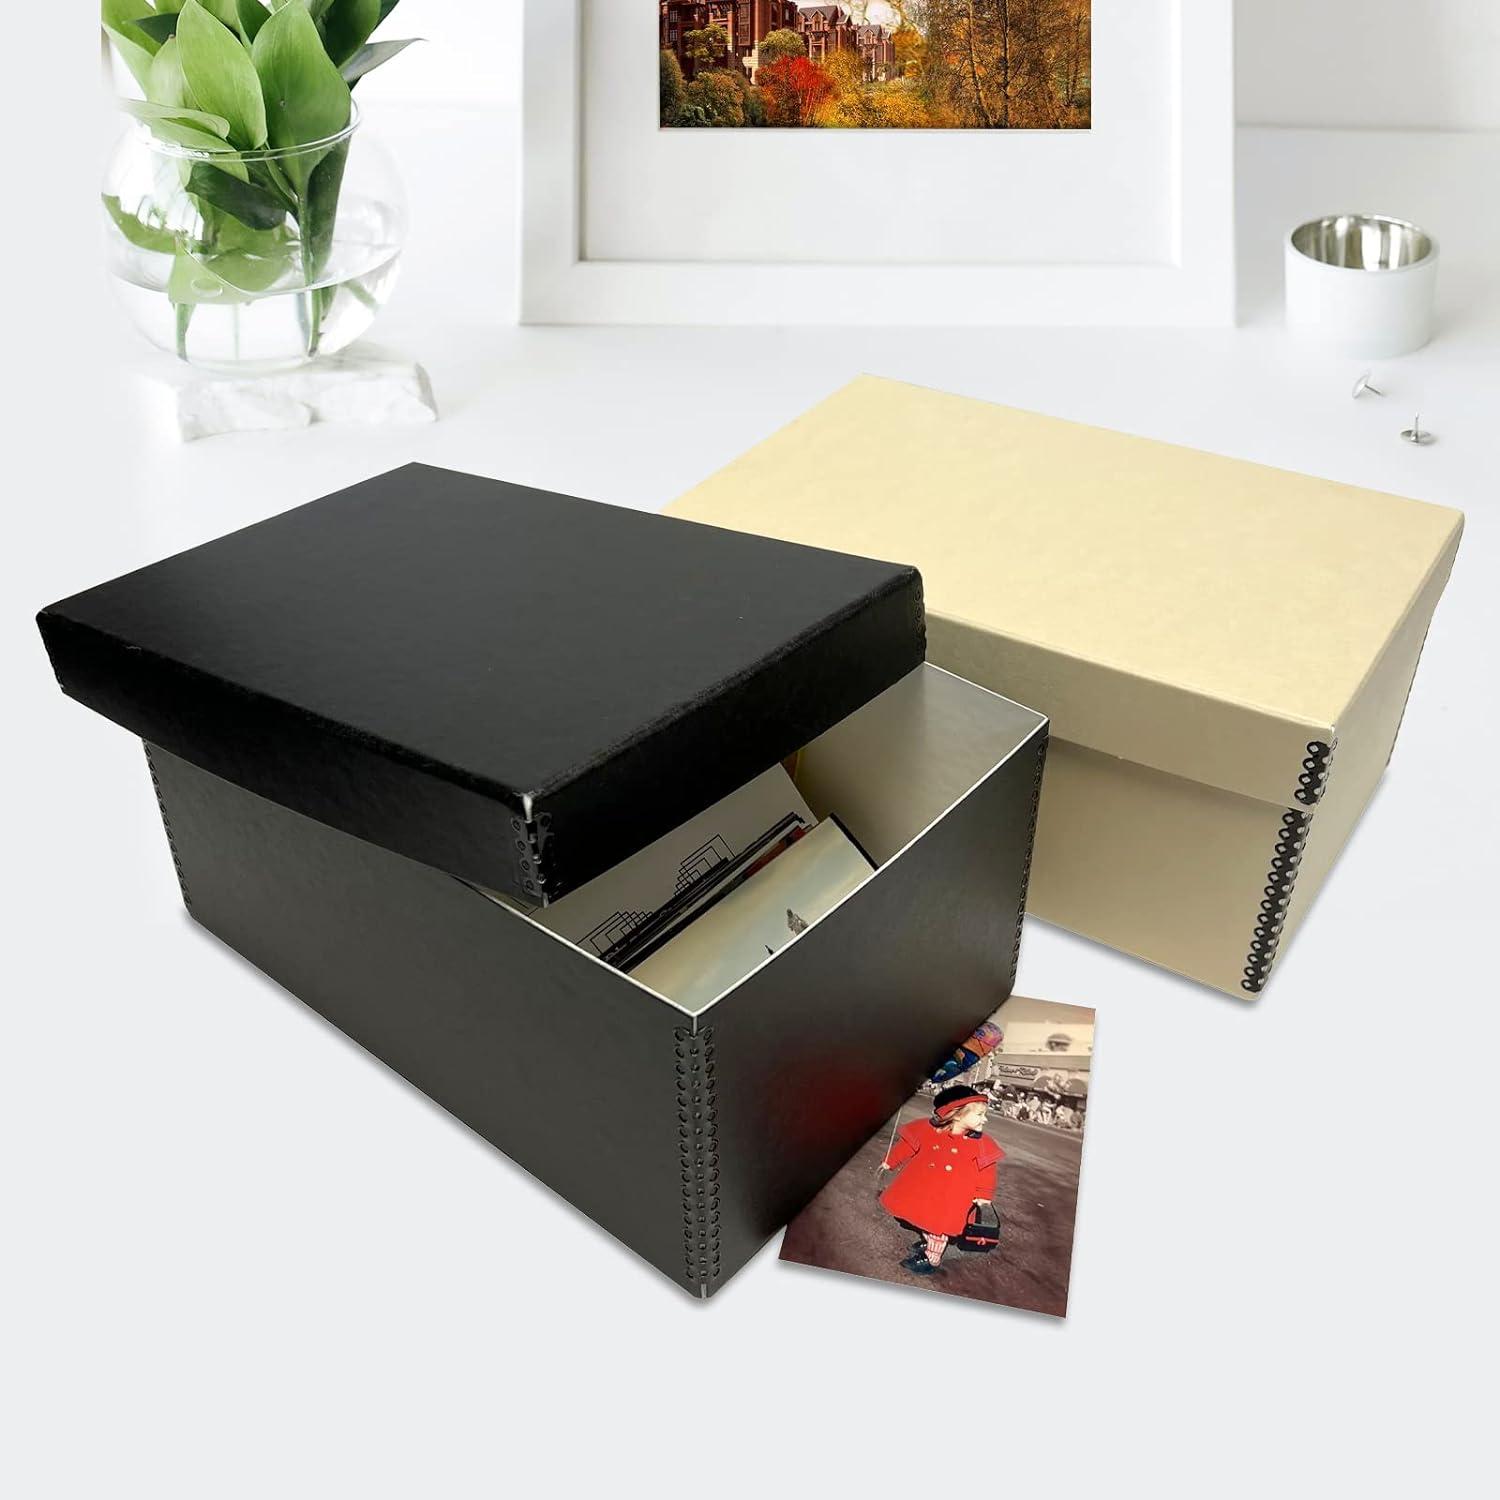 Lineco Short Lid Negative/Print Envelope Boxes (Tan) 799-0507